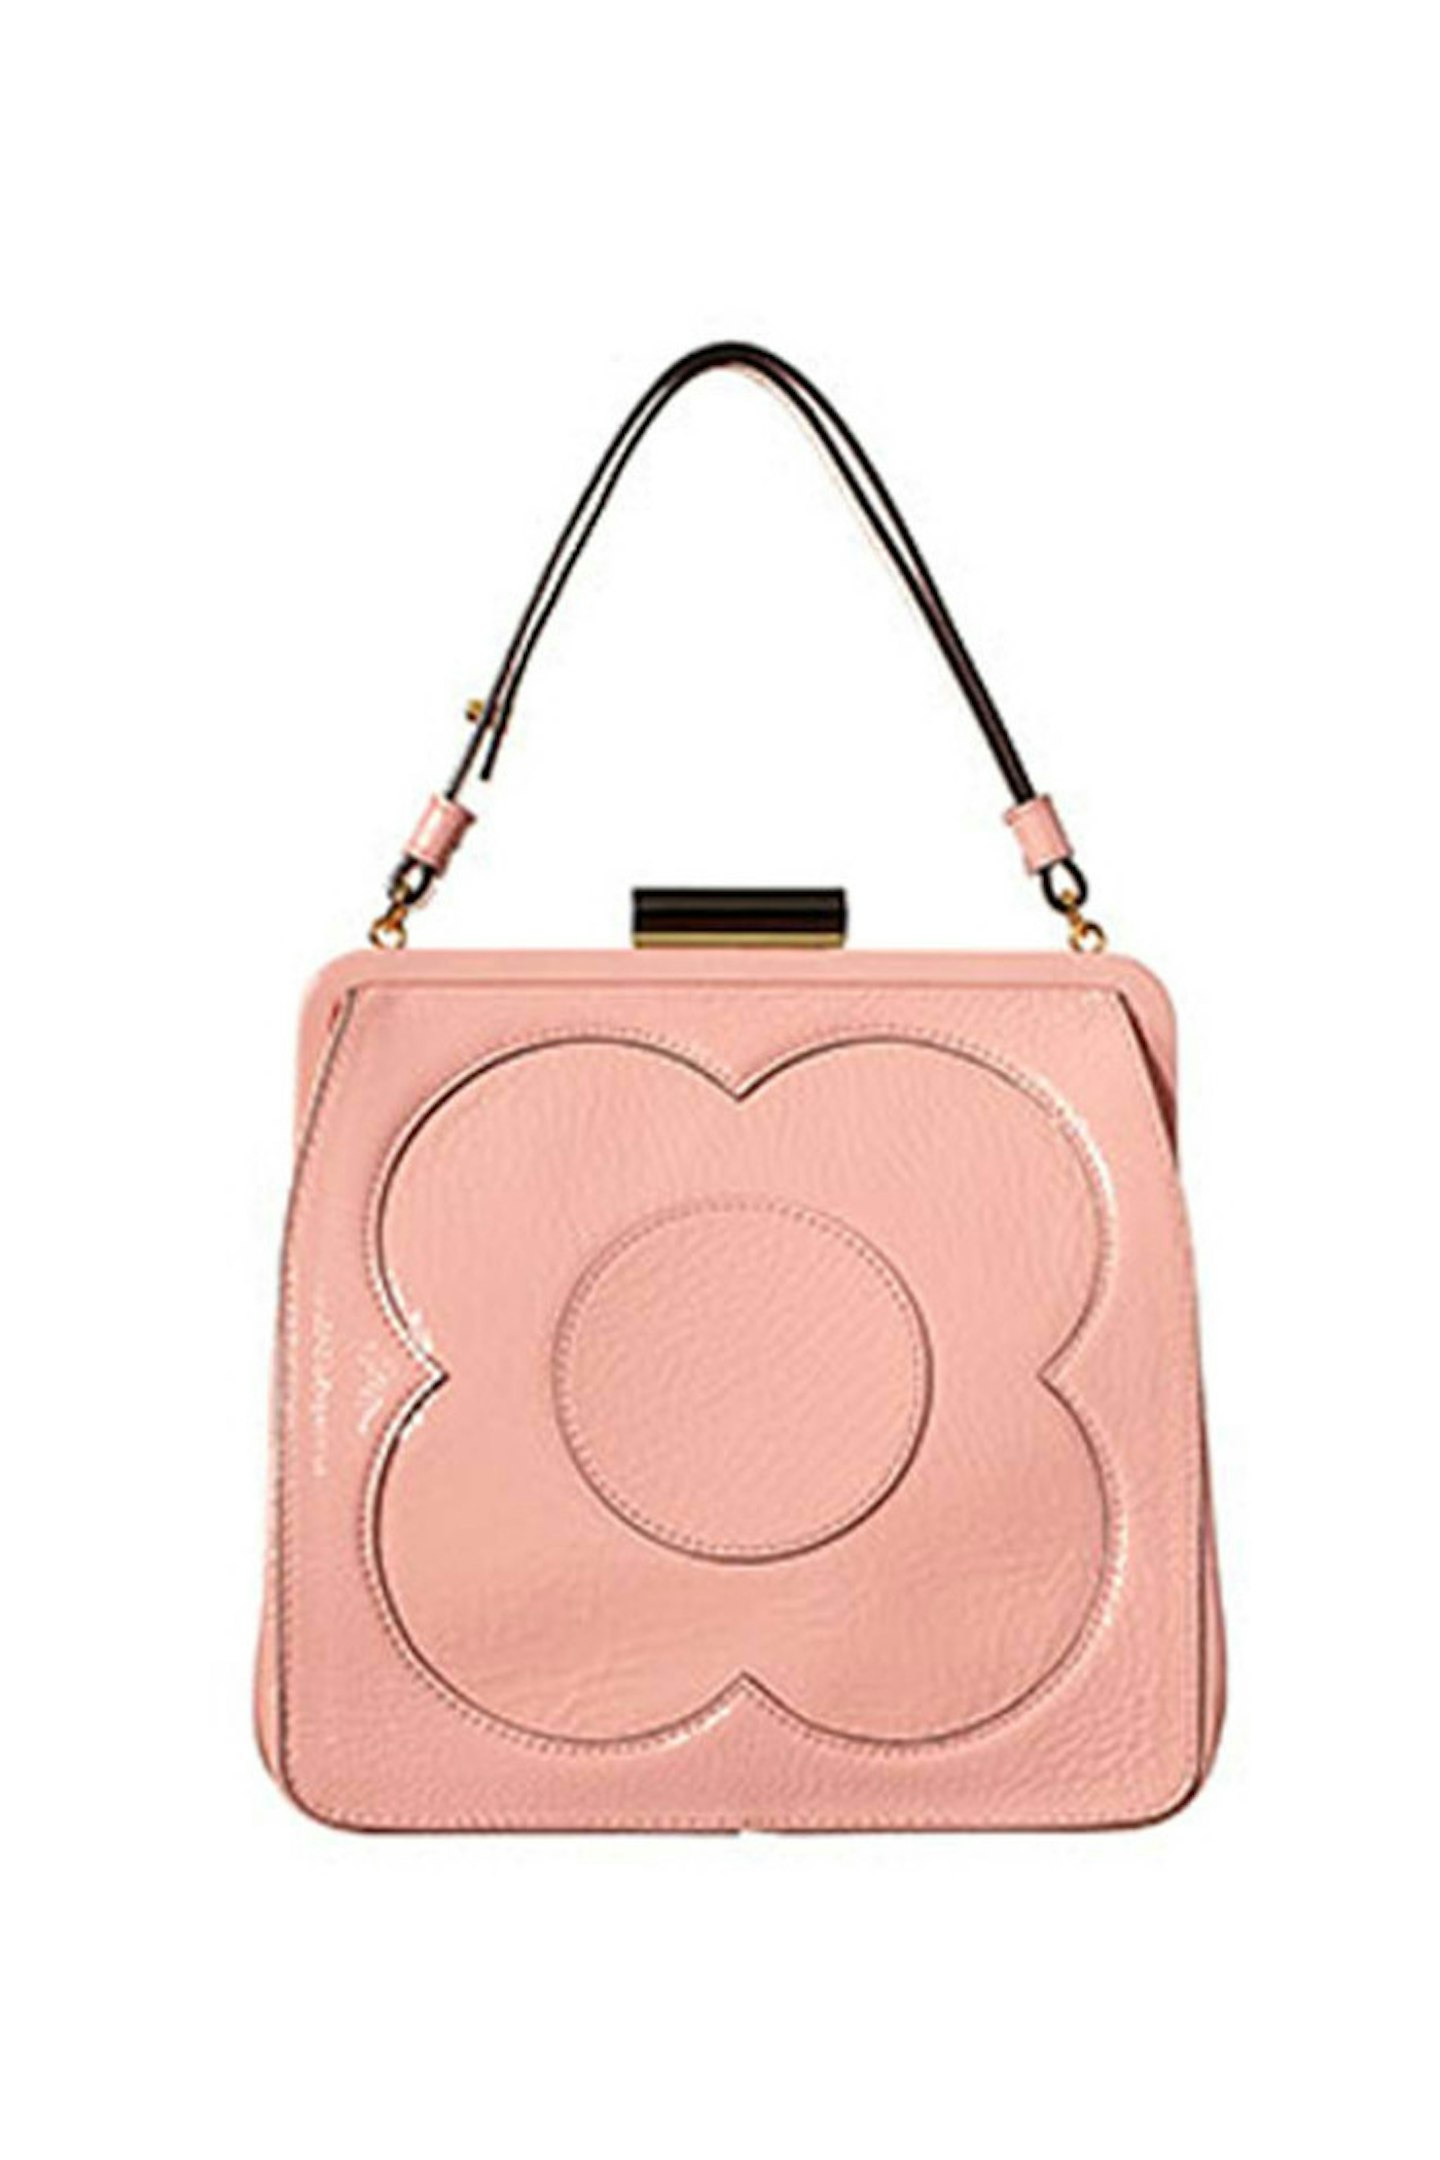 13. Pink patent leather bag, £319, Orla Kiely